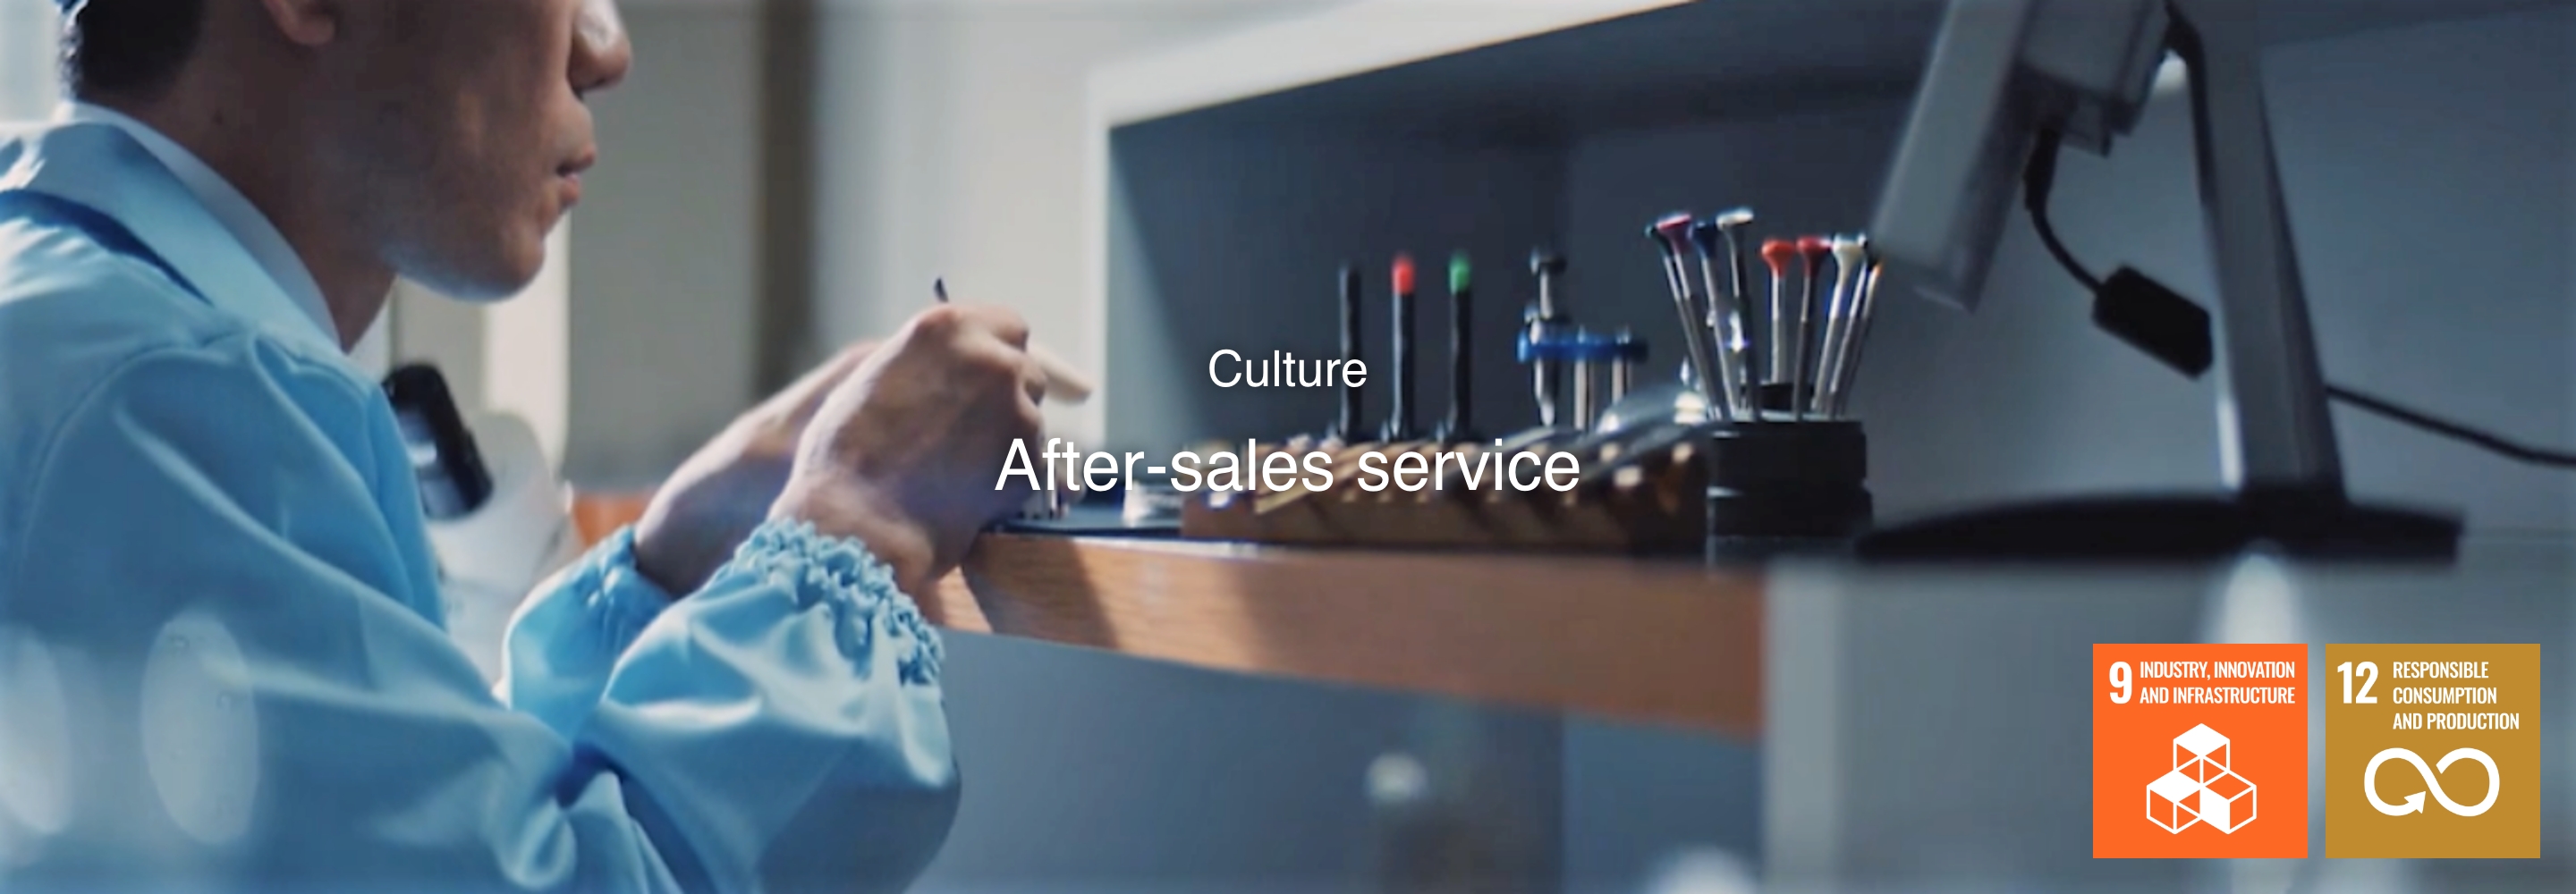 Cultuur After sales service